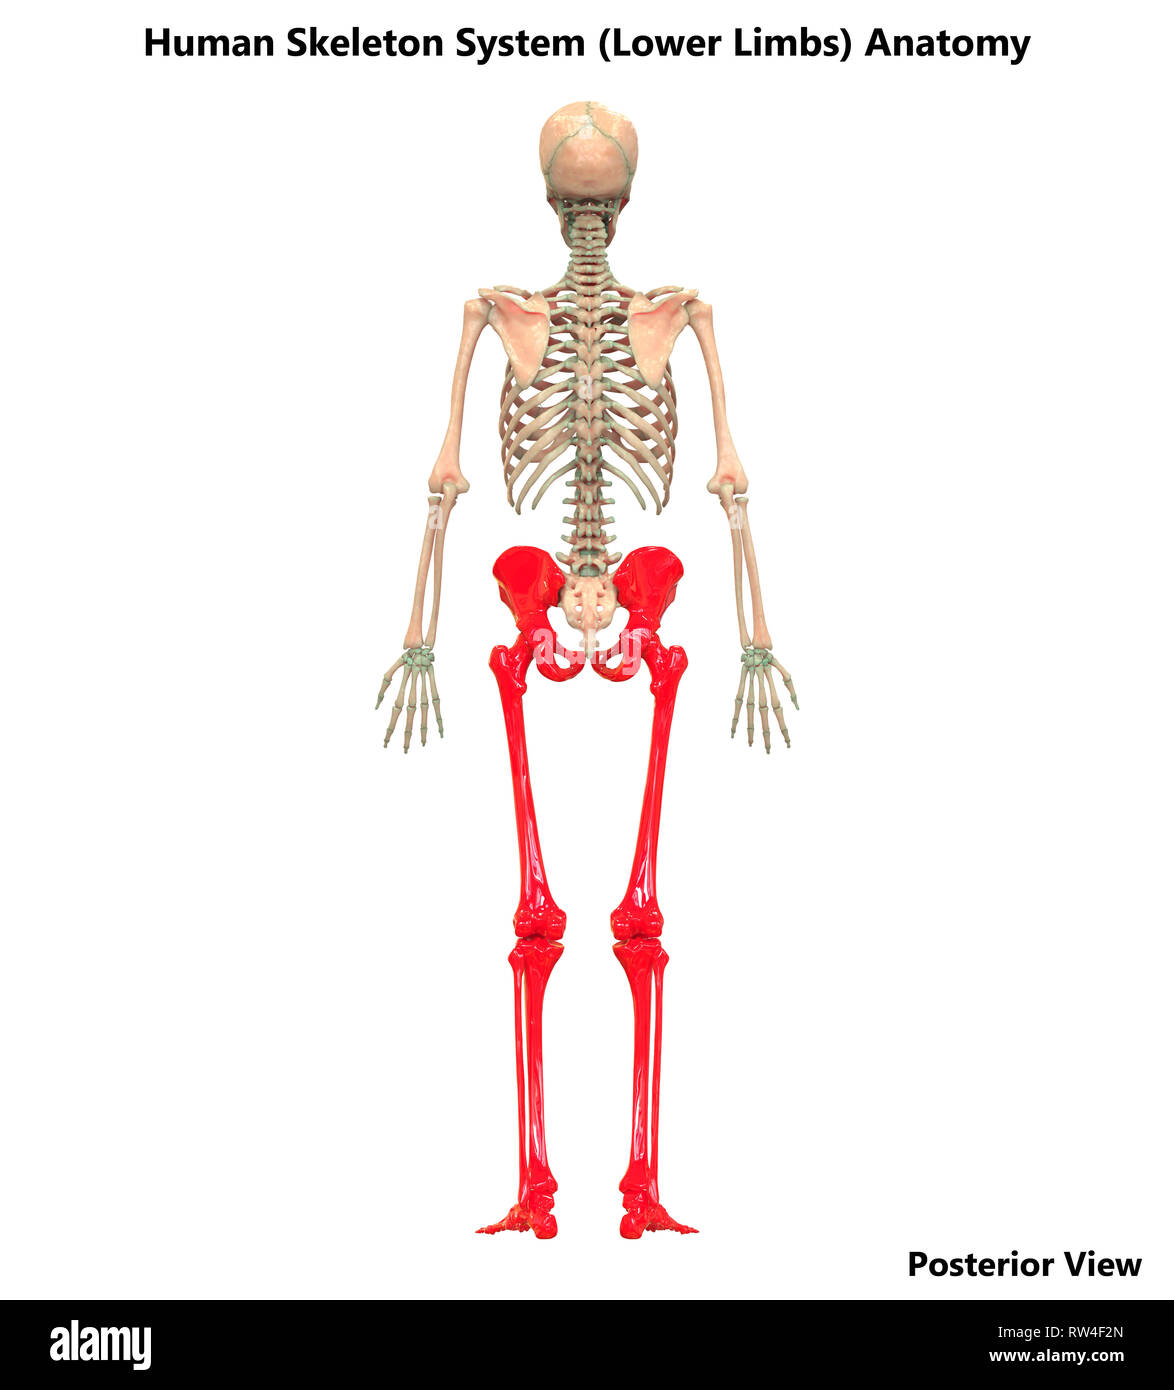 Human Skeleton System Lower Limbs Anatomy Stock Photo